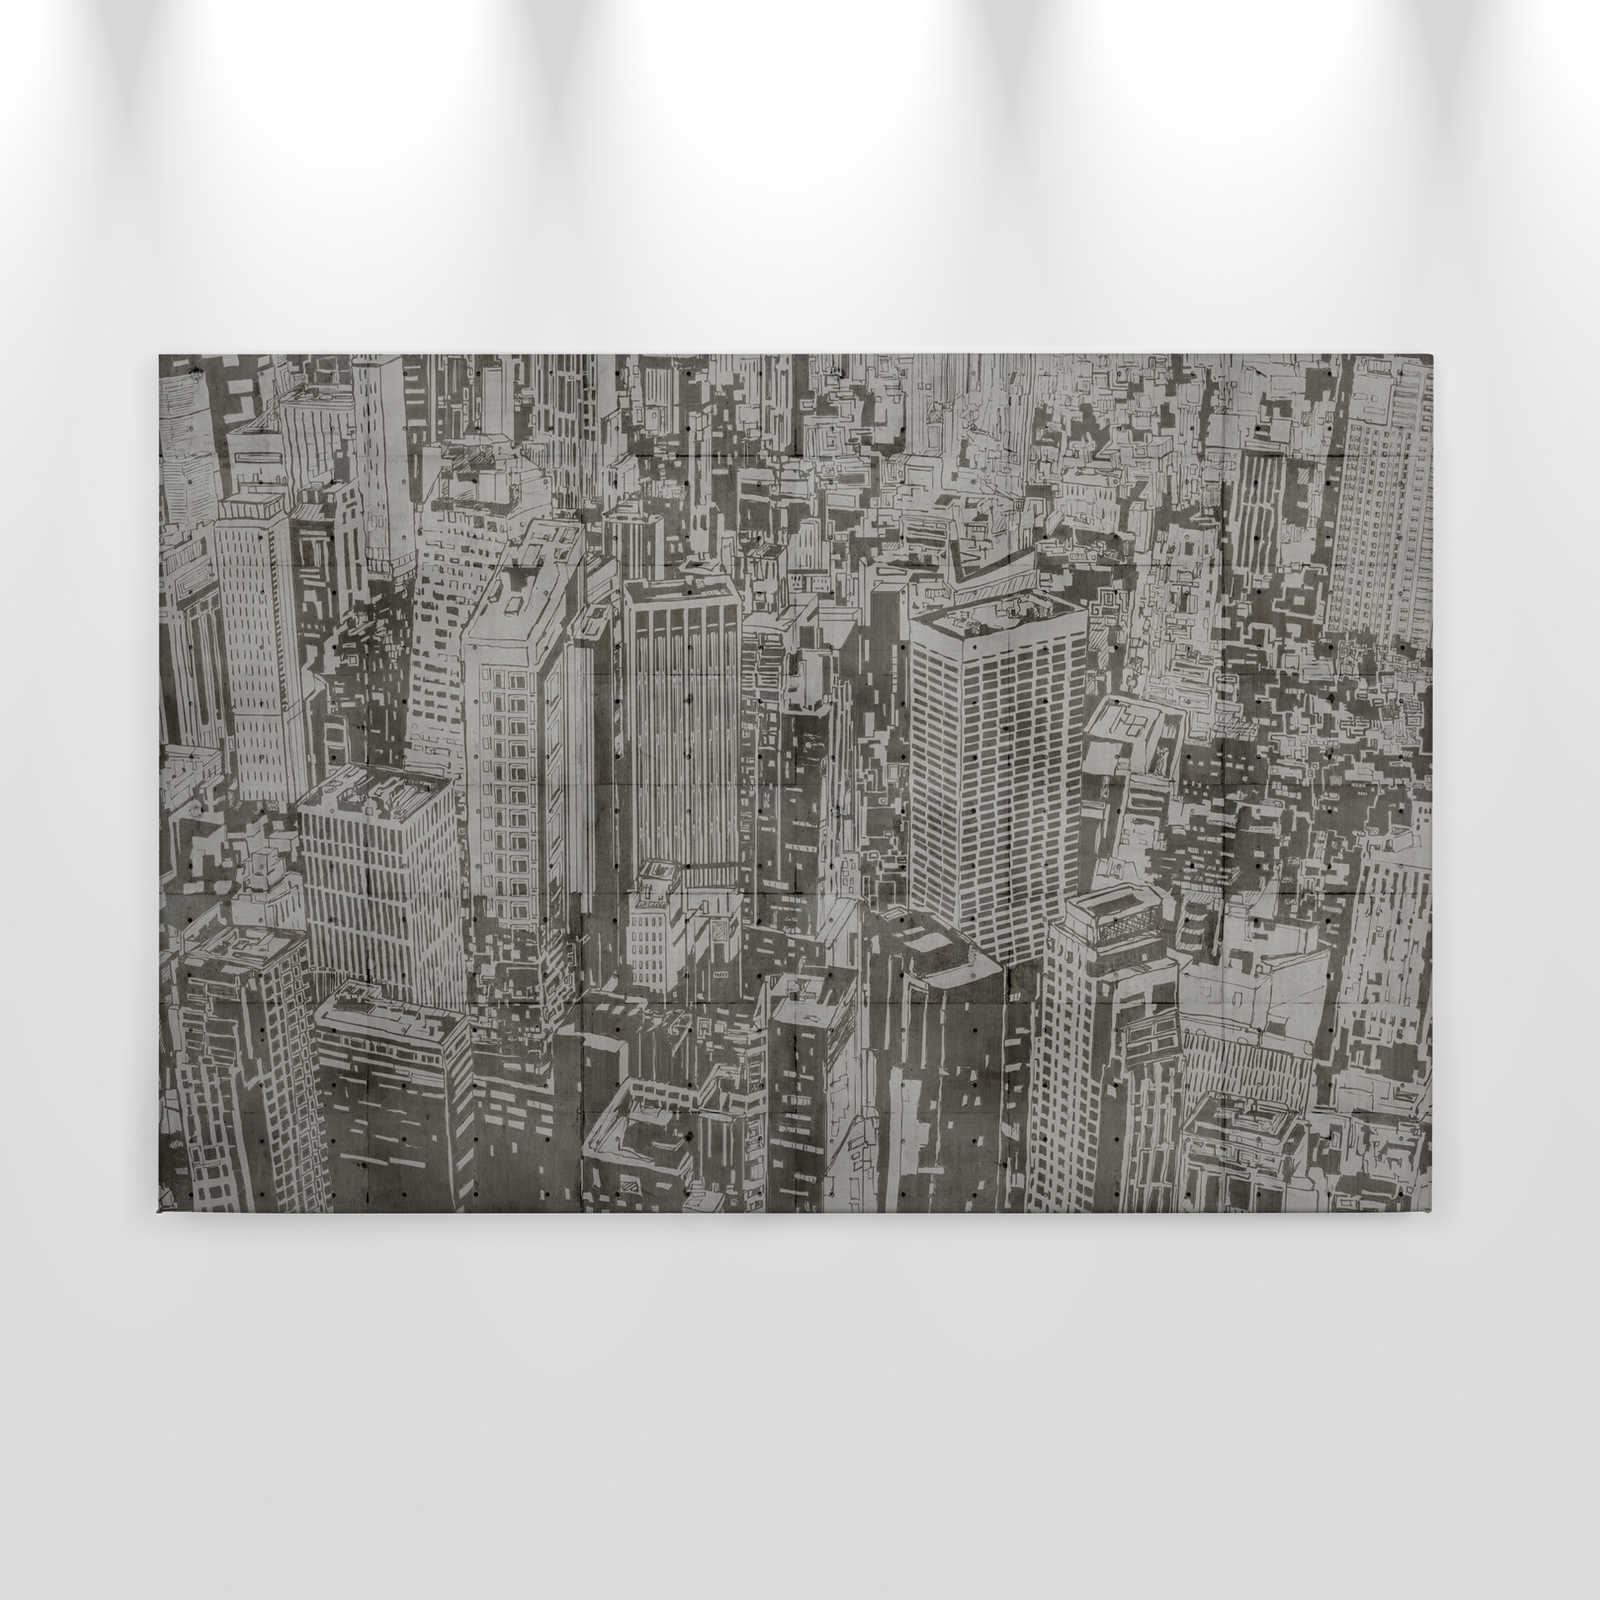             Downtown 2 - Betonnen structuur canvas schilderij New York look - 0.90 m x 0.60 m
        